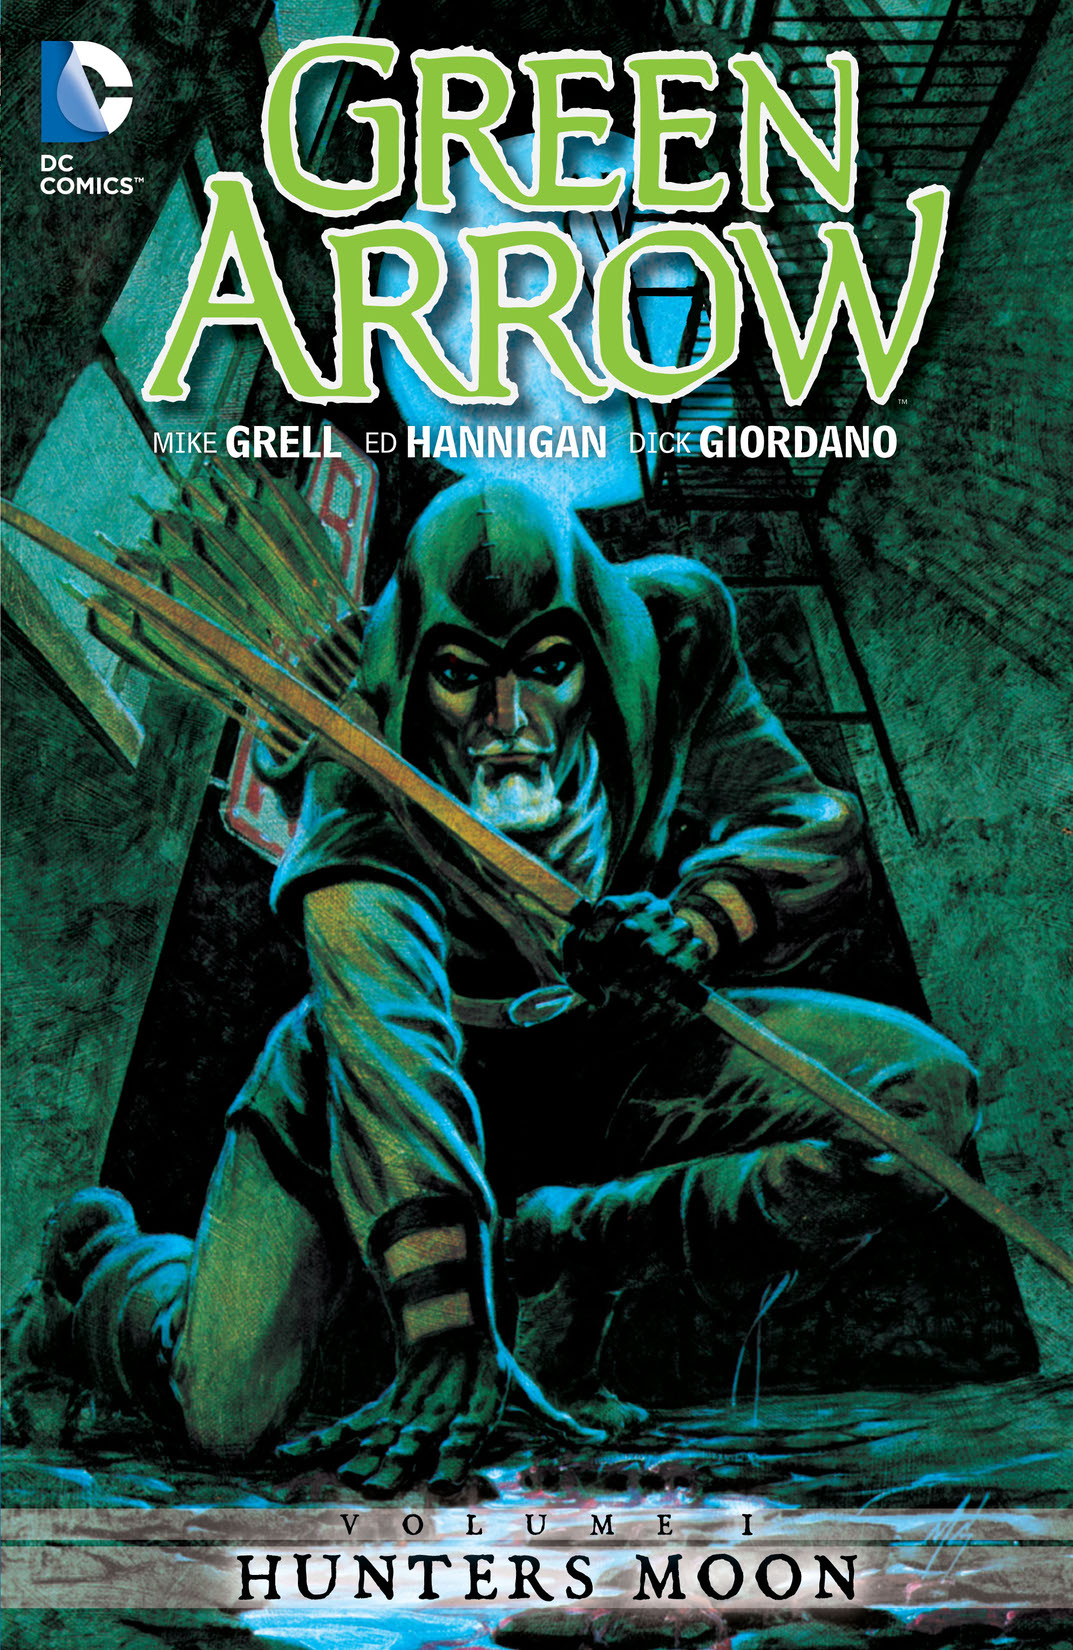 Green Arrow Vol. 1: Hunters Moon preview images